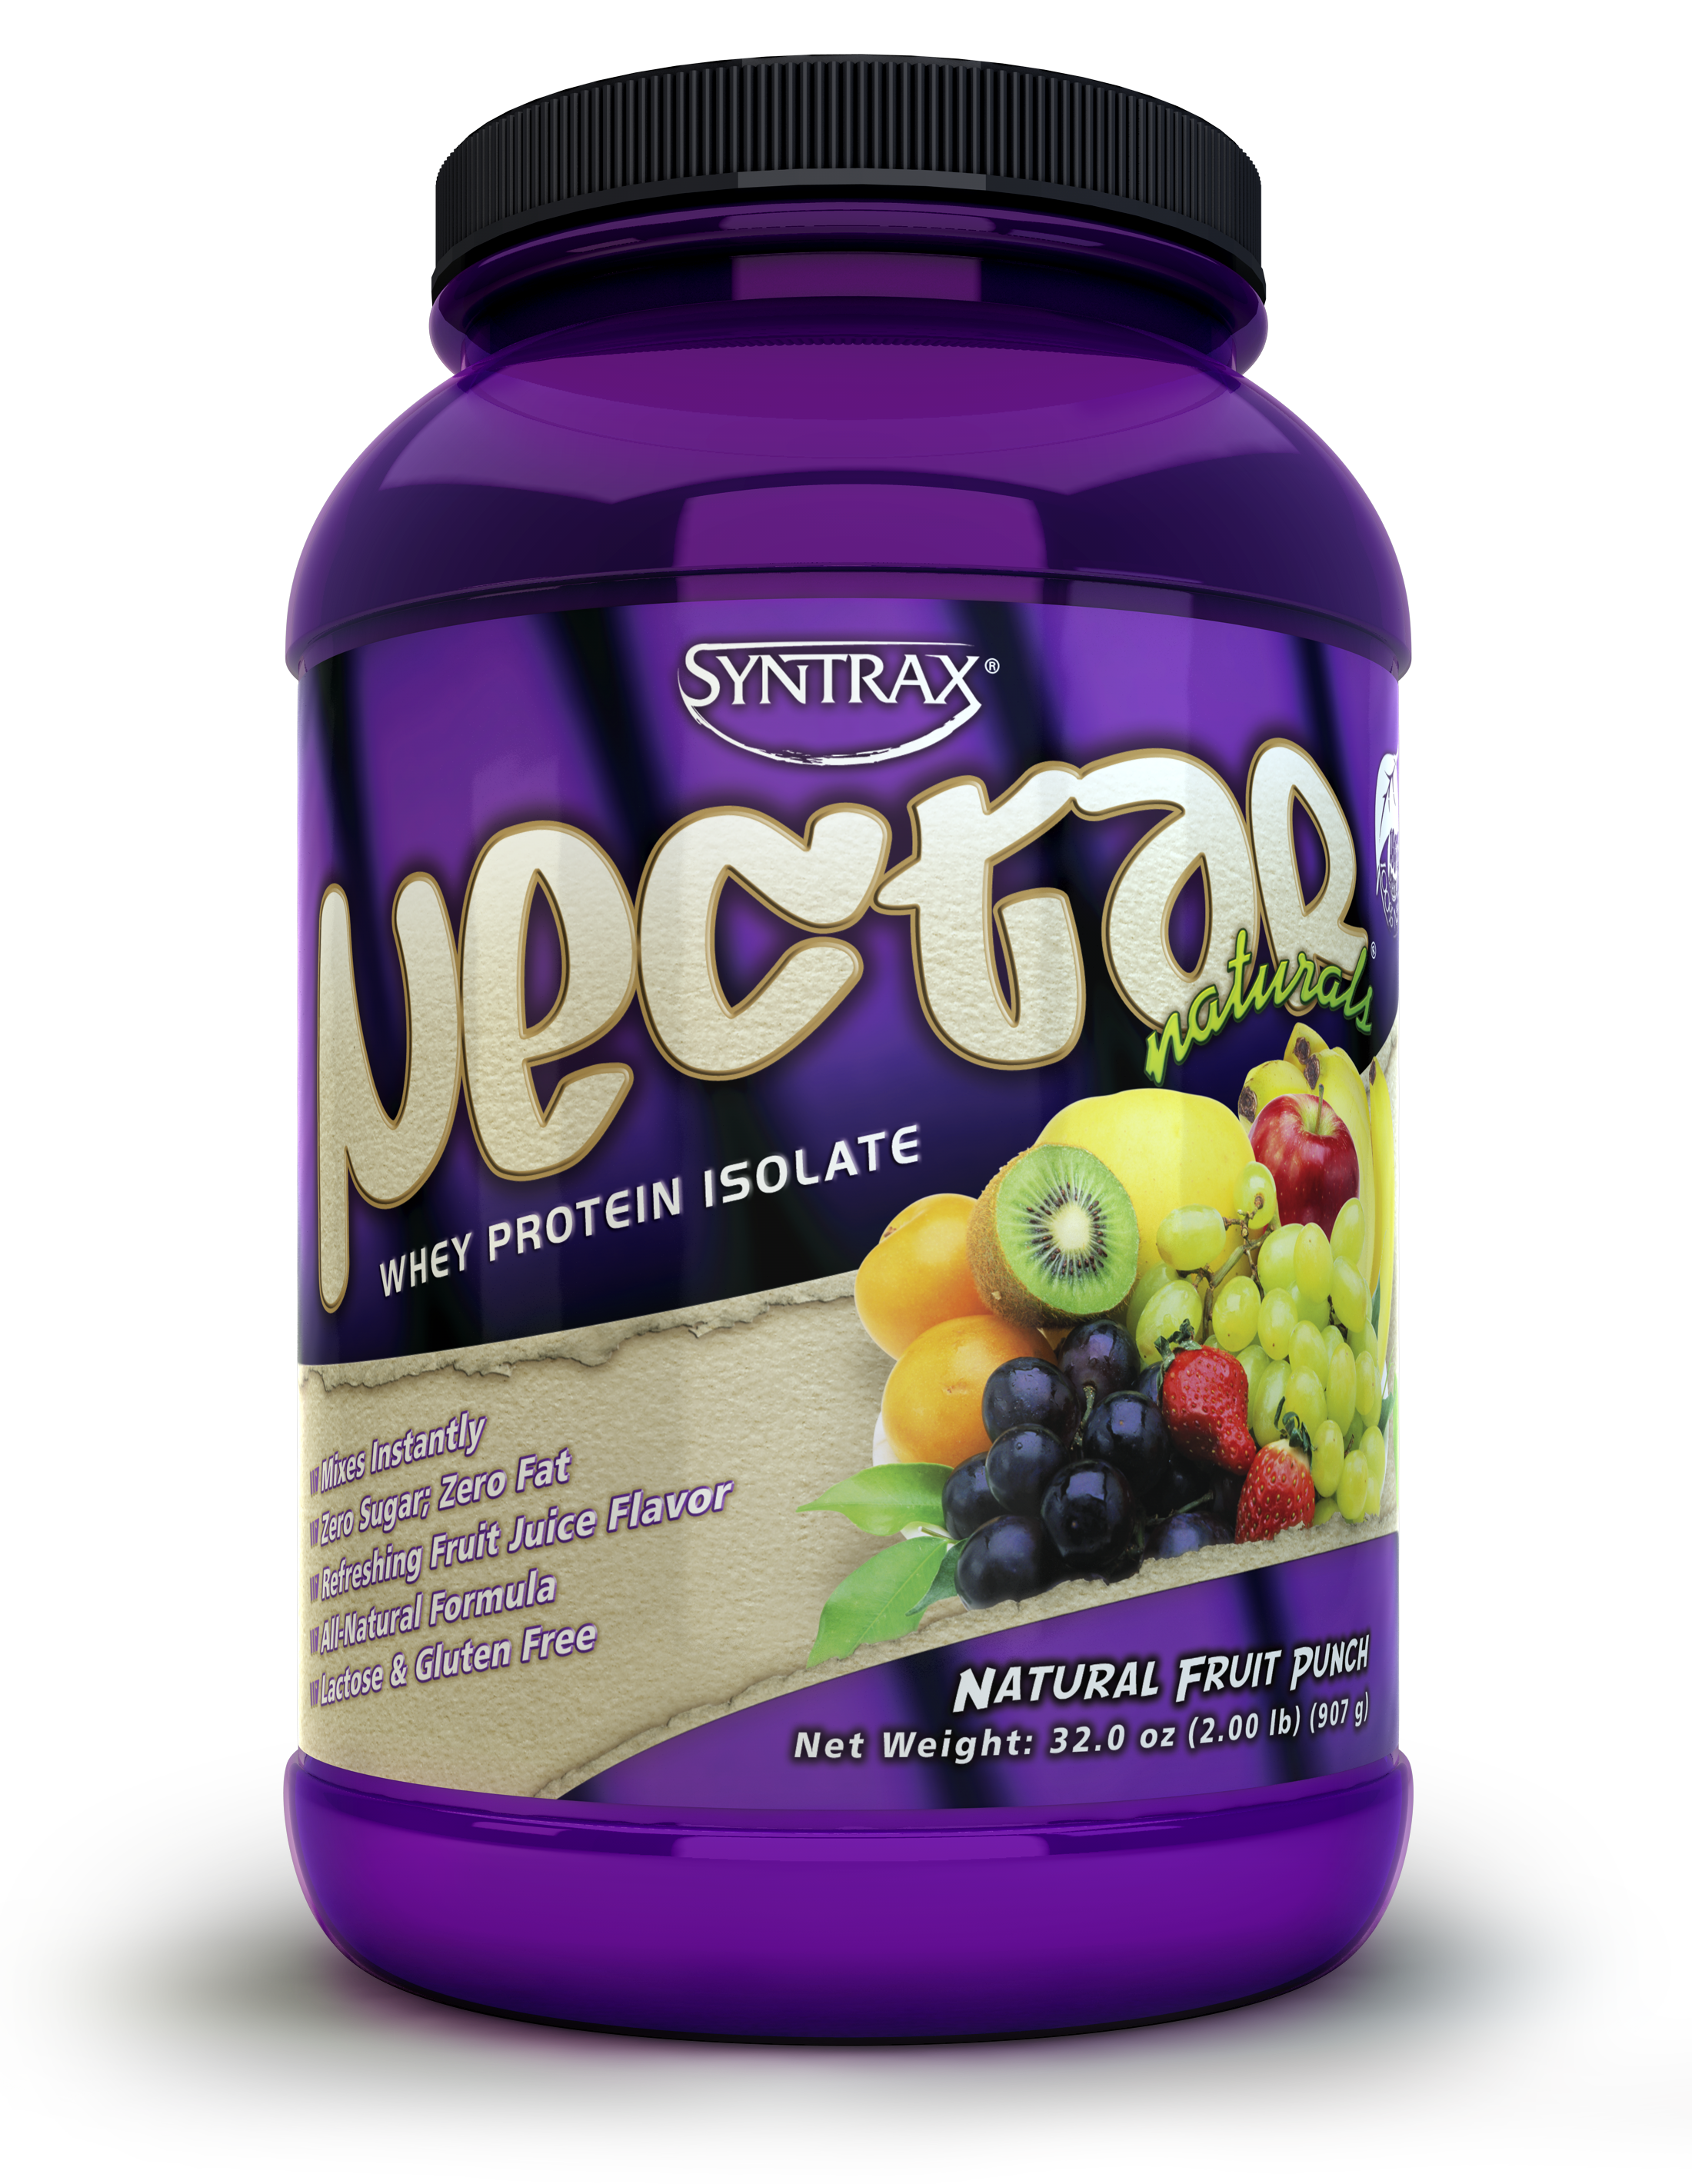 Syntrax Nectar Naturals - Natural Fruit Punch 2 lb